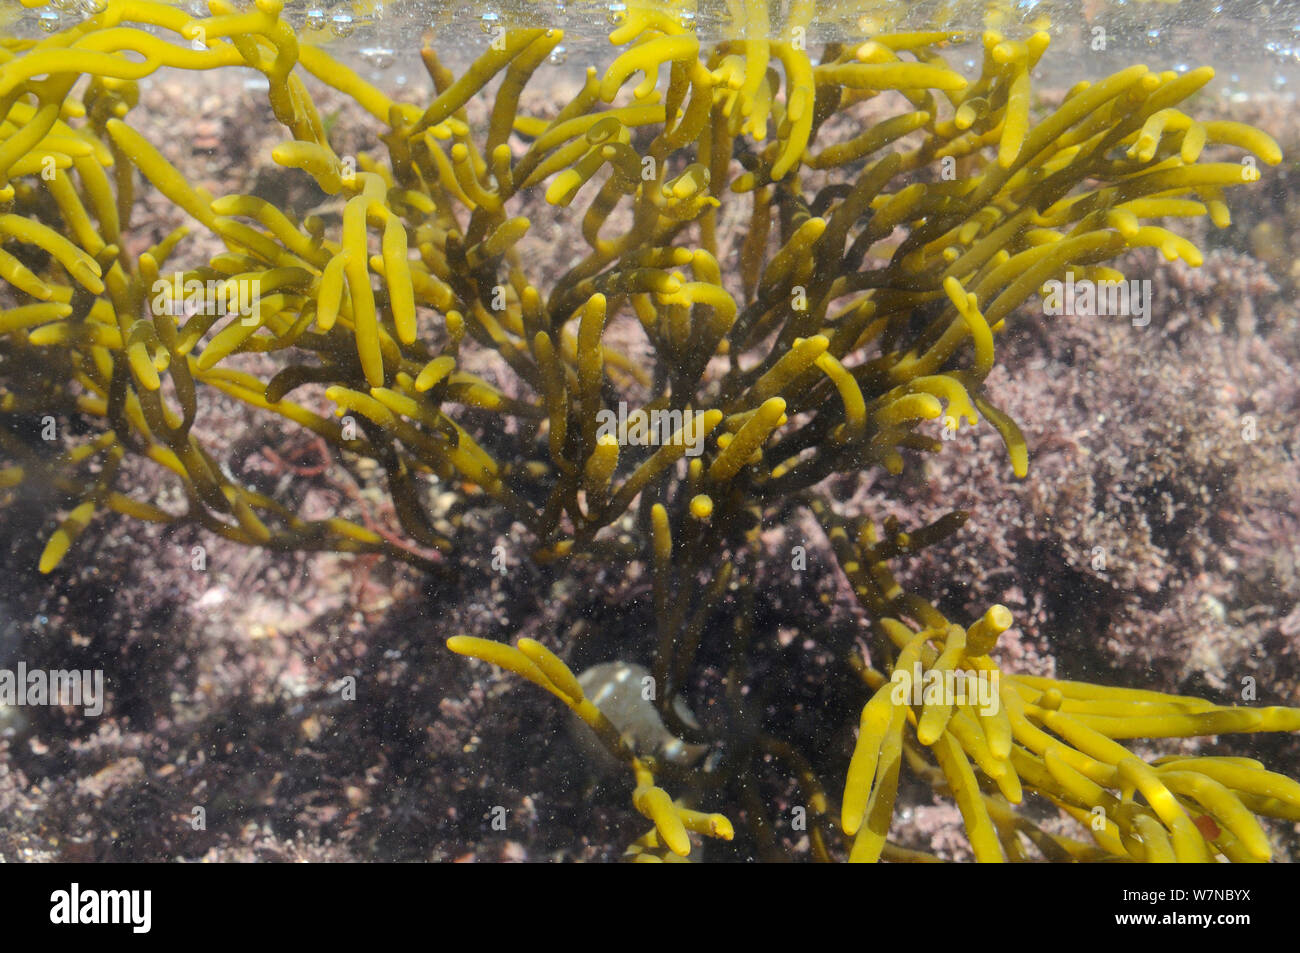 Brown seaweed (Bifurcaria bifurcata), an alga that has shown some anti-cancer properties, growing in a rockpool low on the shore alongside Coralweed (Corallina officinalis), Wembury, Devon, UK, August. Stock Photo